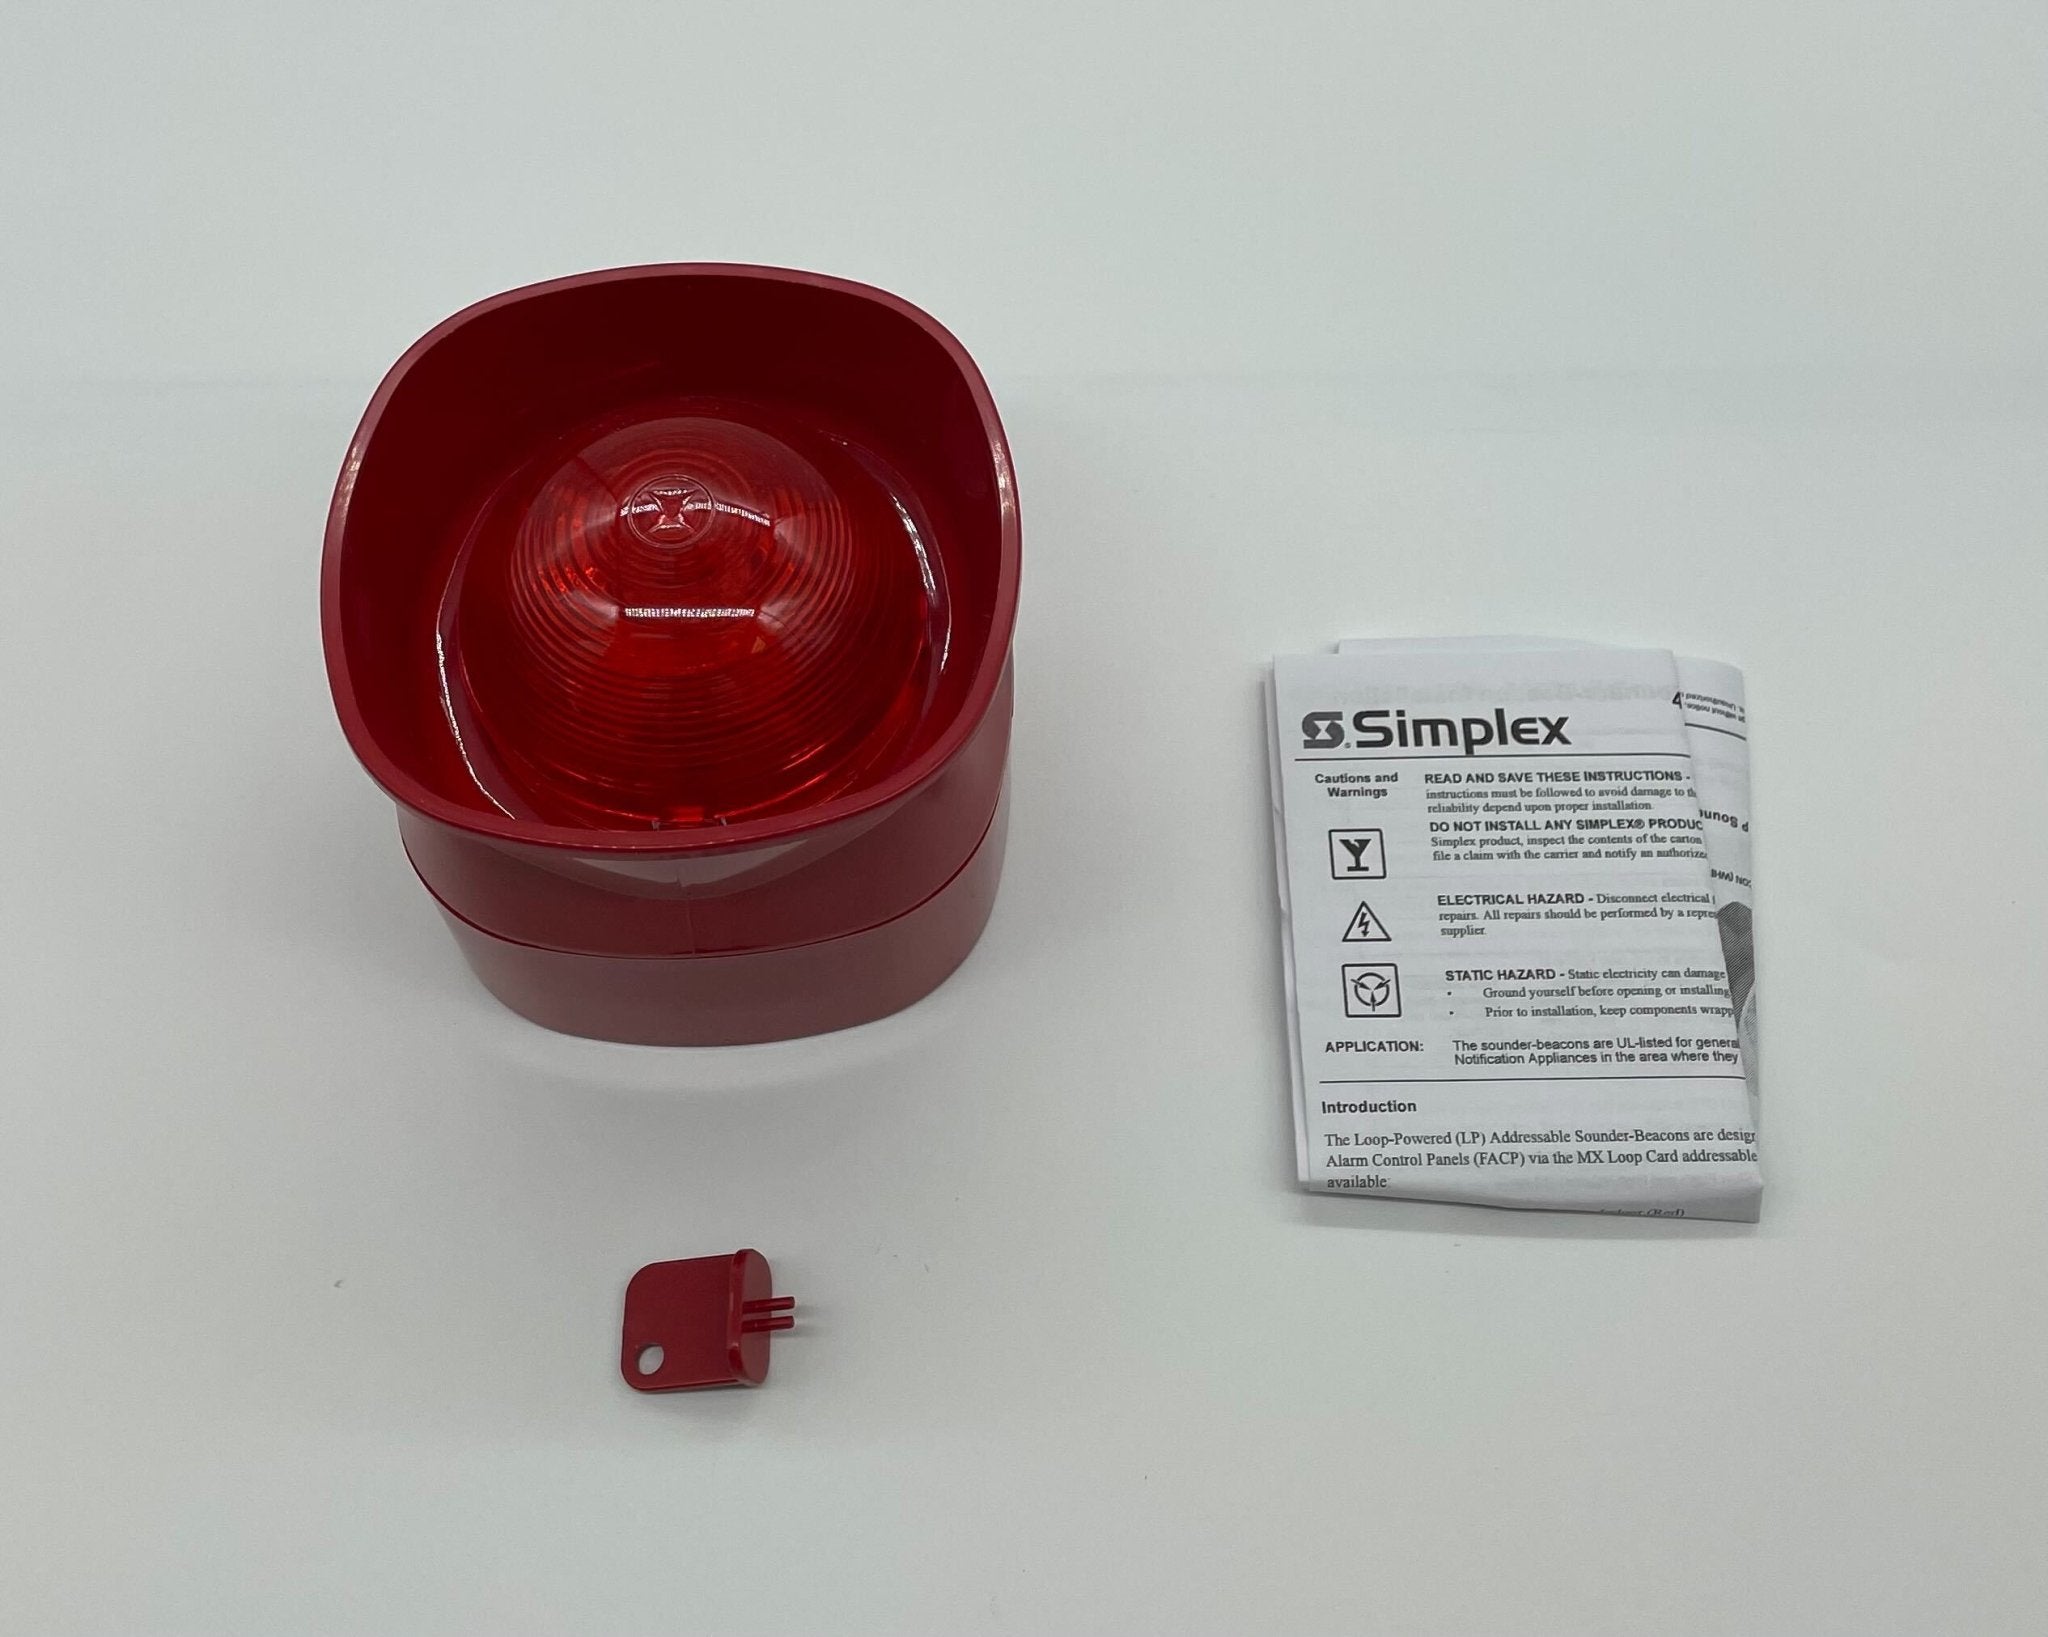 Simplex 4906-5205 Loop Power Sounder Beacon - The Fire Alarm Supplier